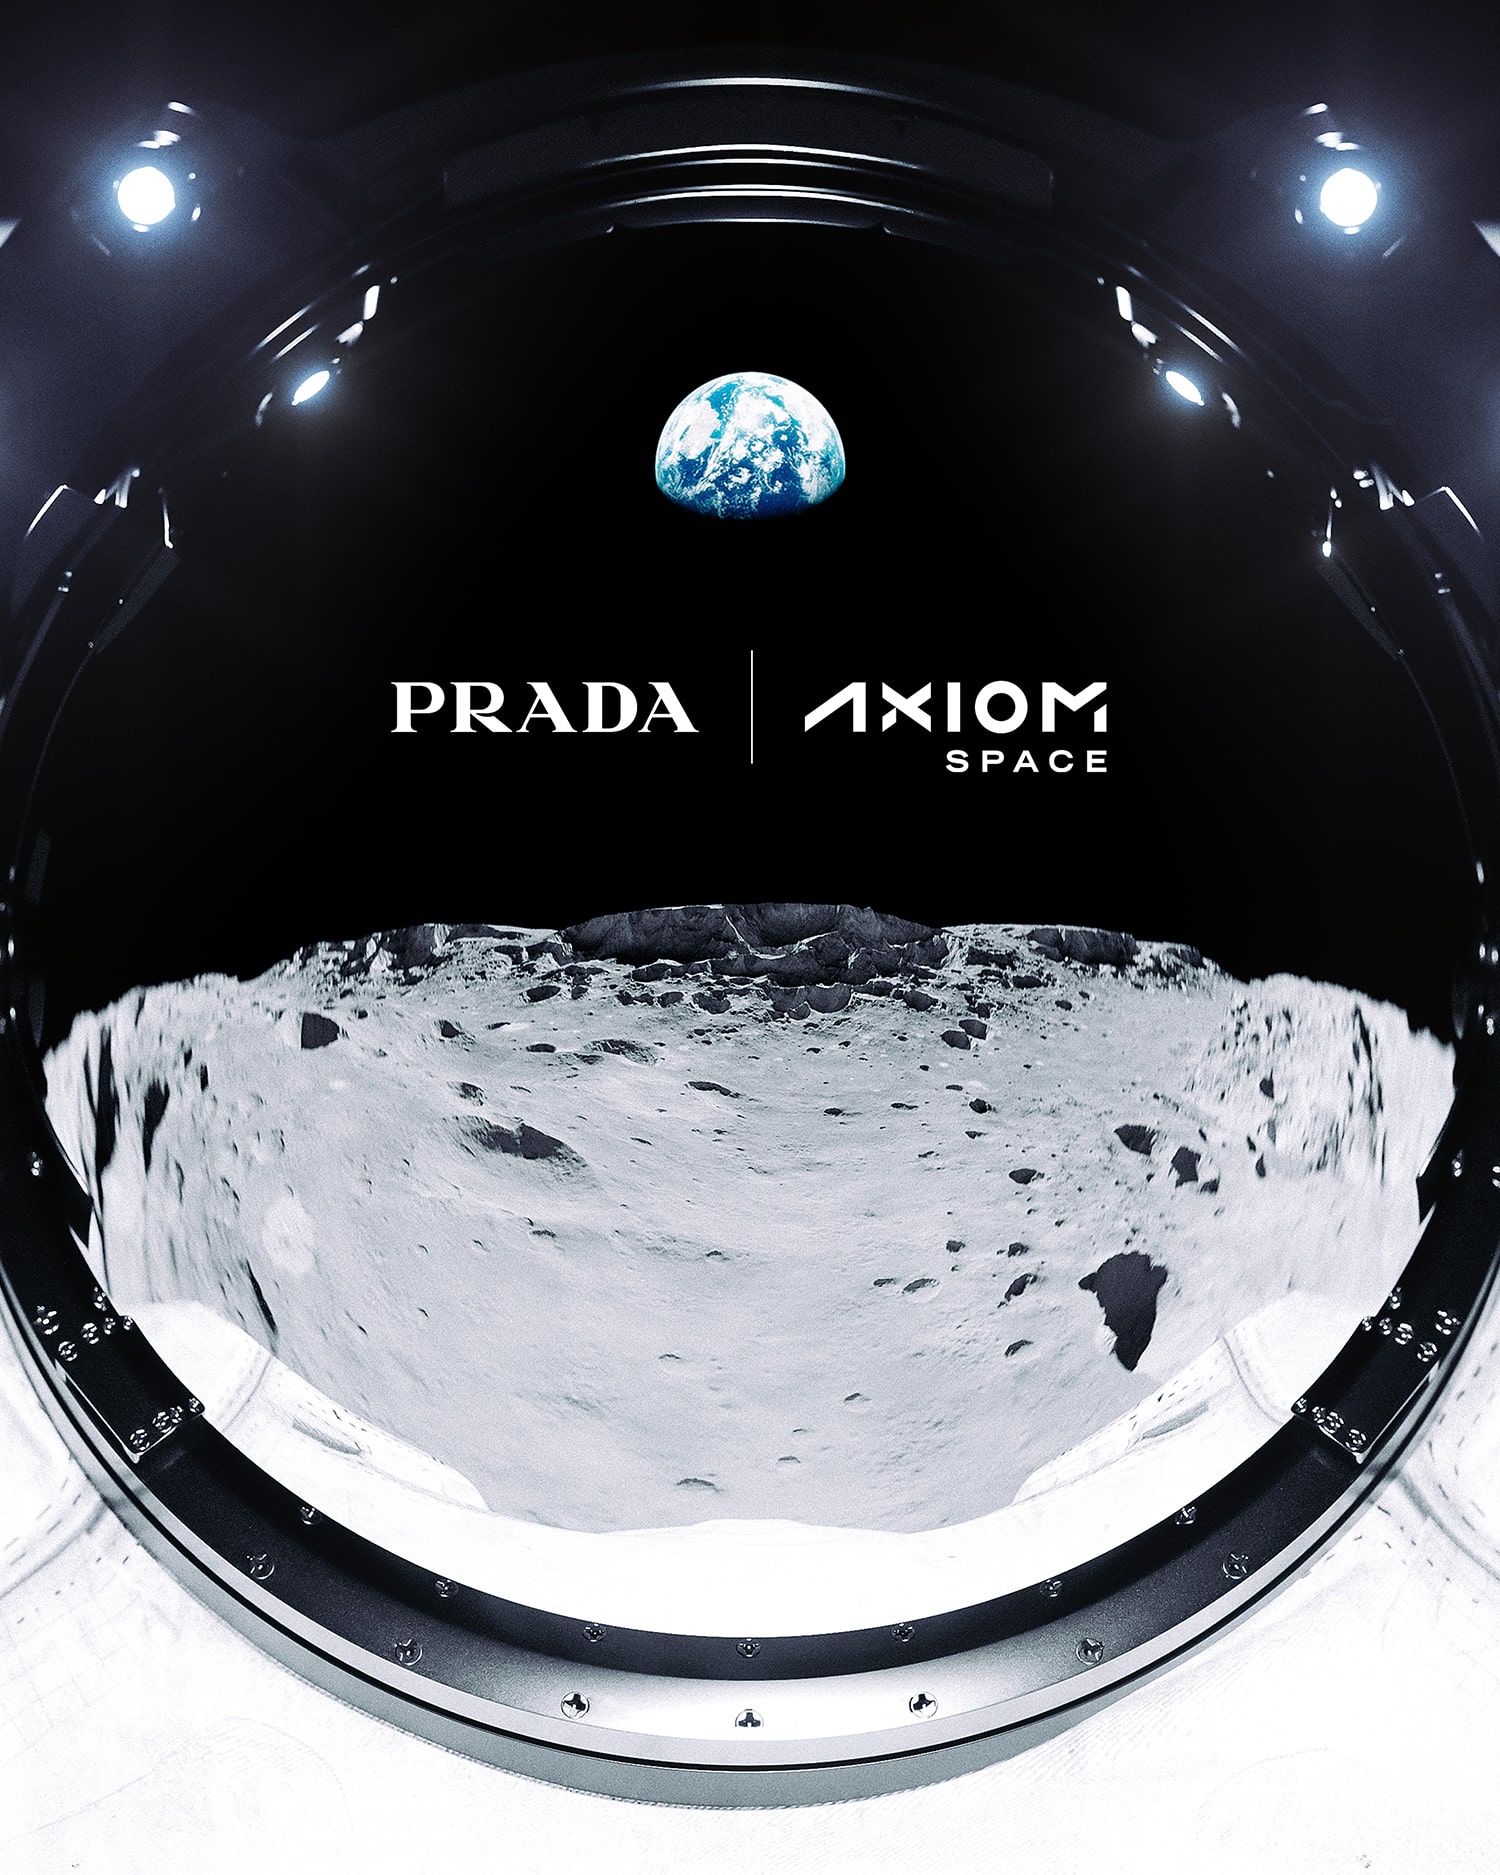 PRADA & AXIOM: REDEFINING SPACE FASHION